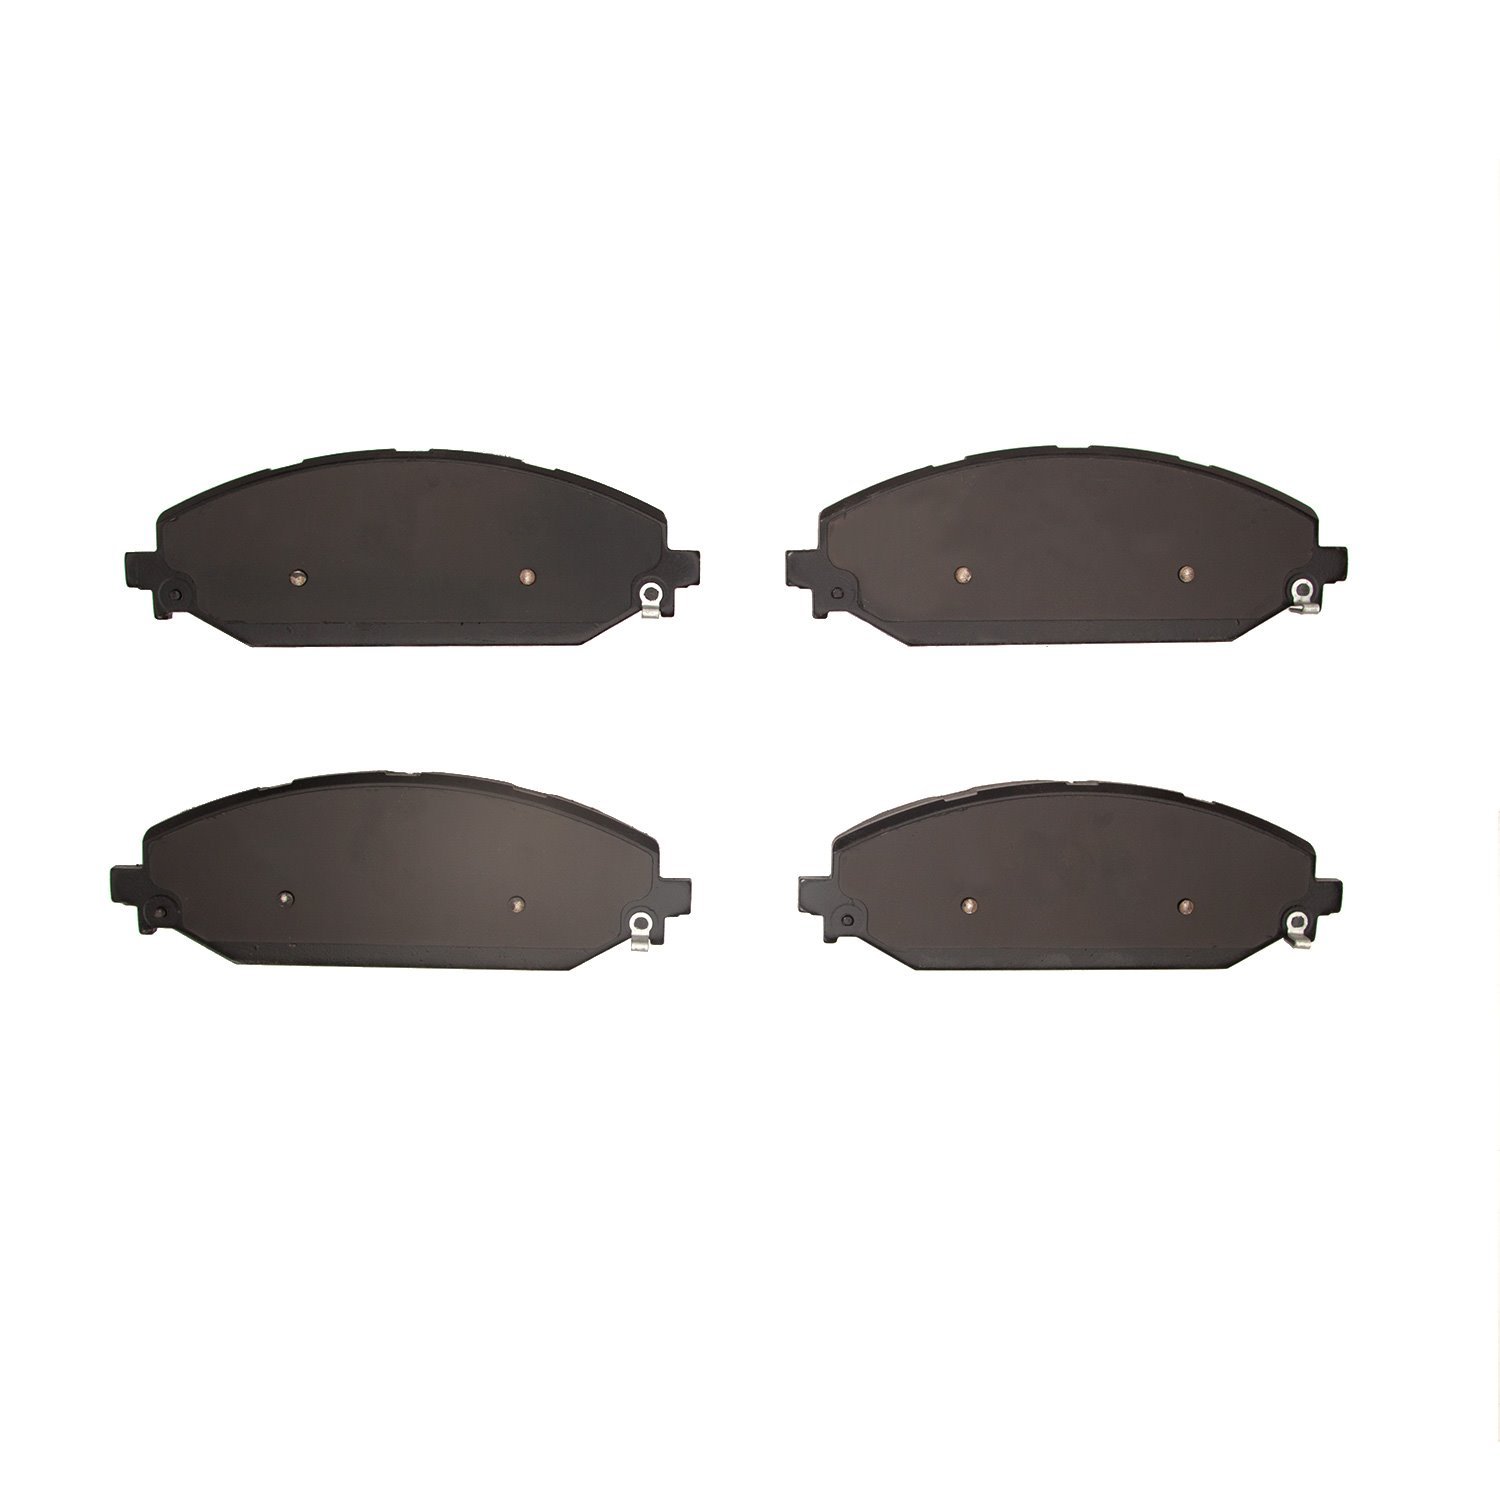 1551-2179-00 5000 Advanced Ceramic Brake Pads, Fits Select Mopar, Position: Front